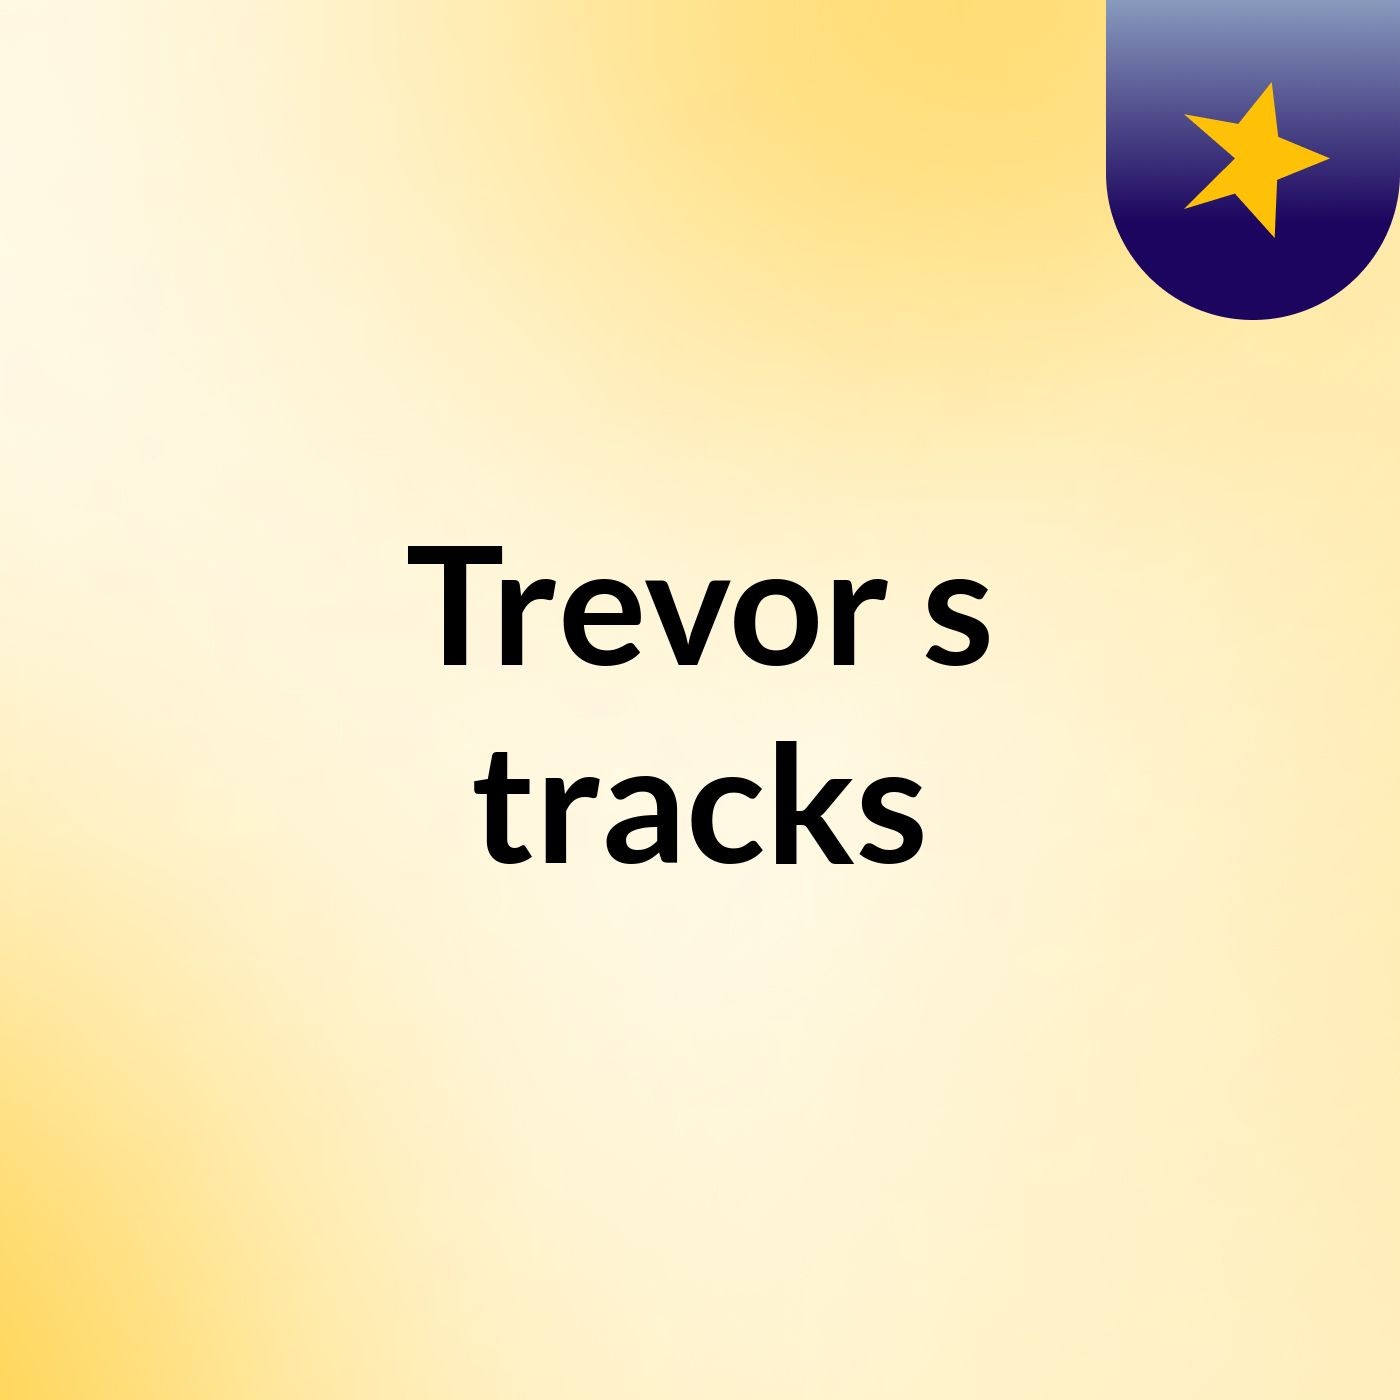 Trevor's tracks